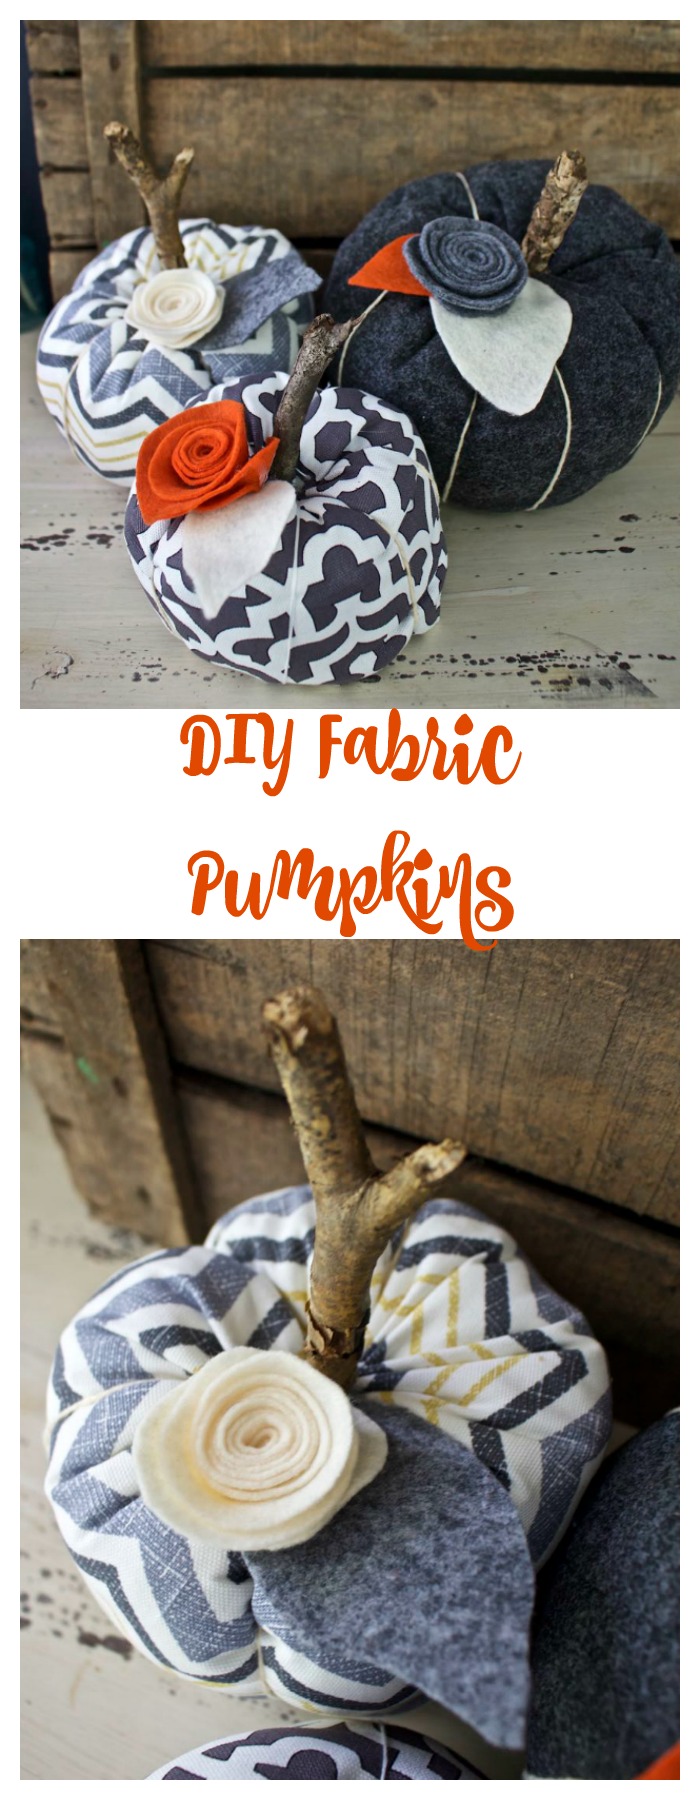 Fabric Pumpkins. DIY Fabric Pumpkins, perfect Fall decor. Decorate fabric pumpkins with felt flowers and twig stems.